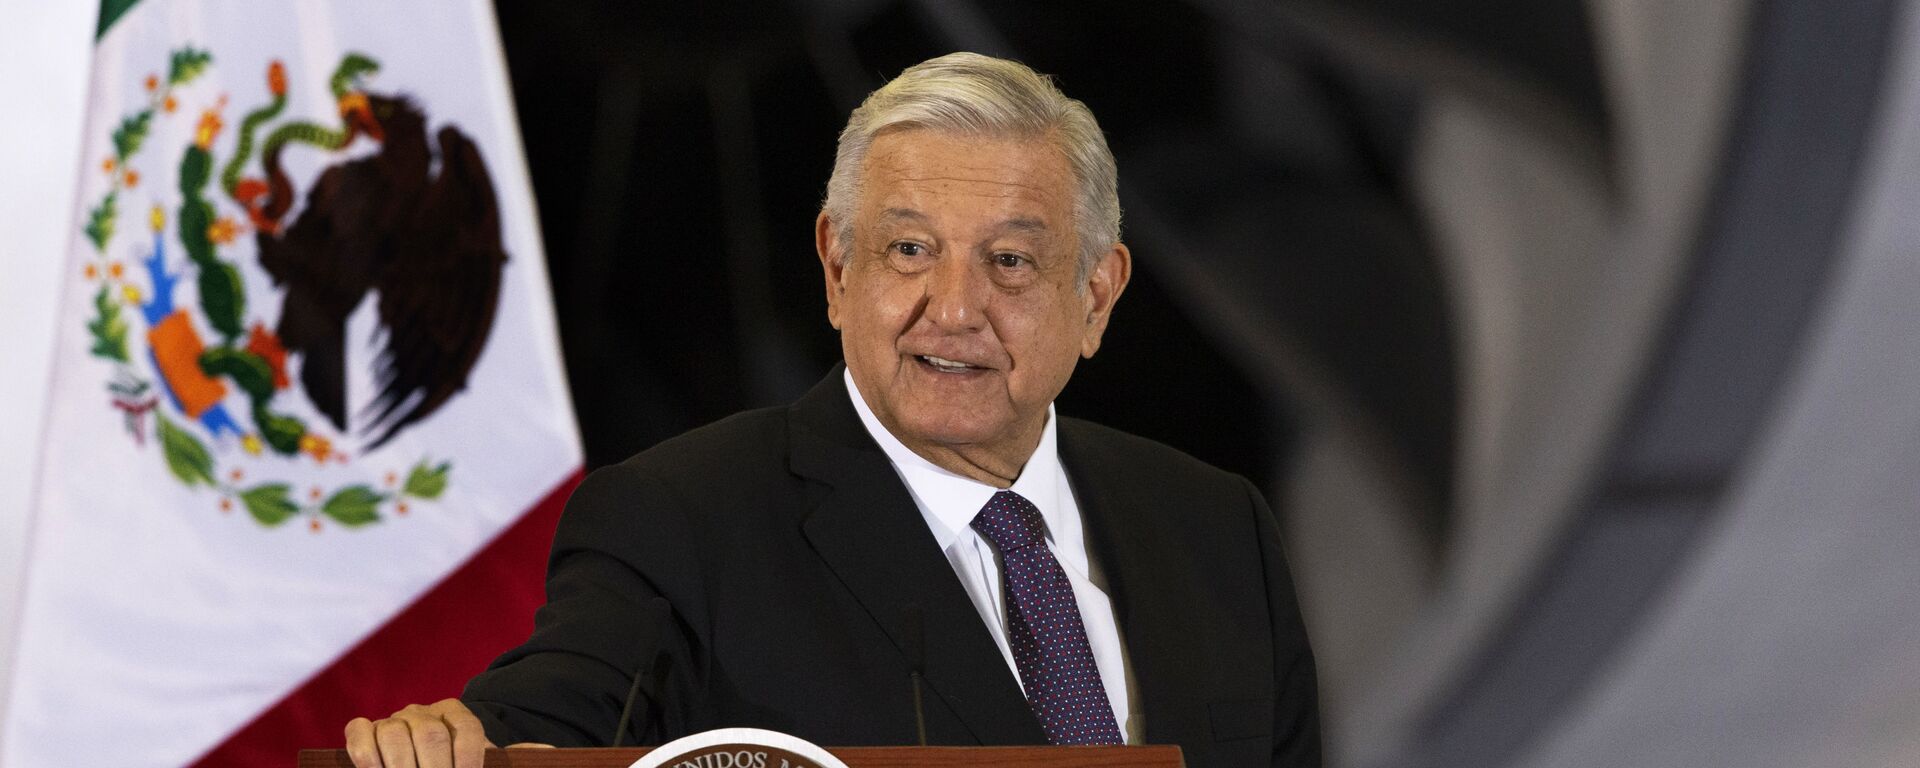 El presidente de México, Andrés Manuel López Obrador - Sputnik Mundo, 1920, 31.12.2020